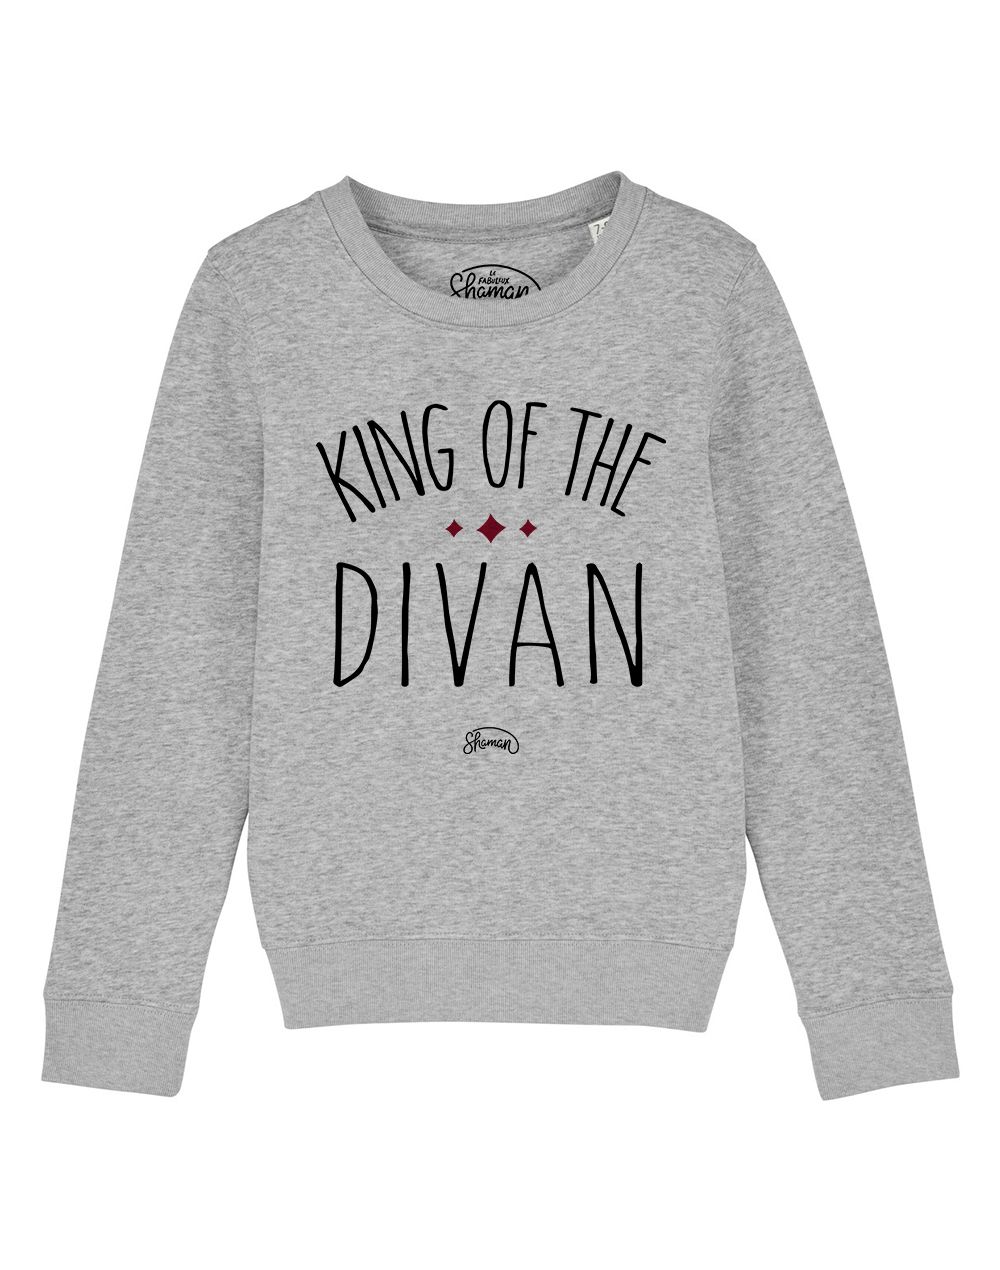 Sweat "King of the divan"